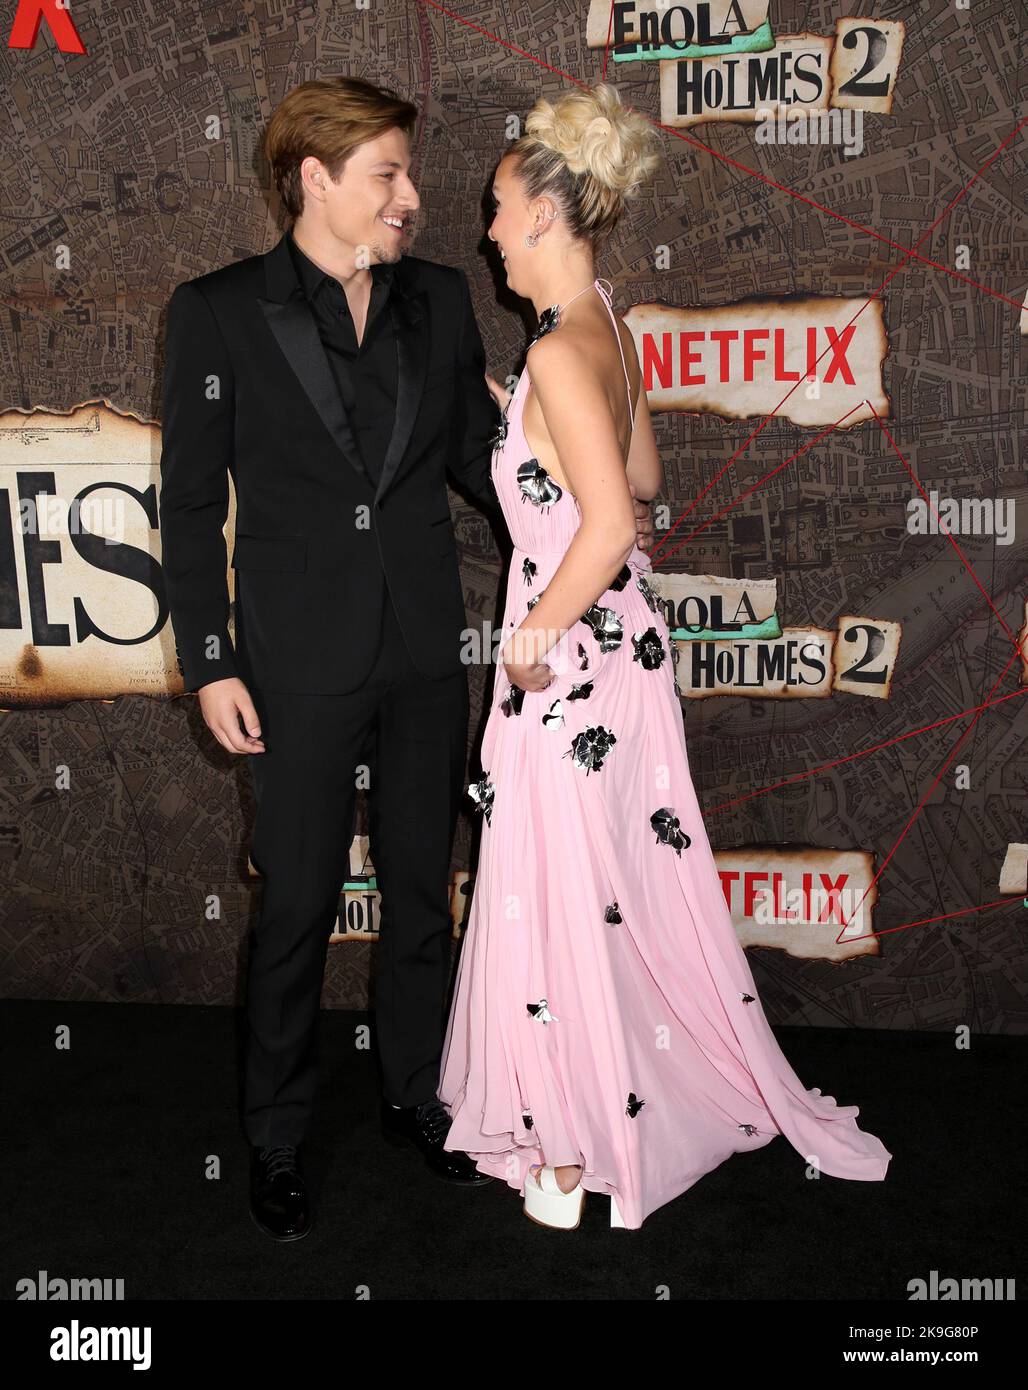 Millie Bobby Brown, Jake Bongiovi Attend 'Enola Holmes 2' Premiere